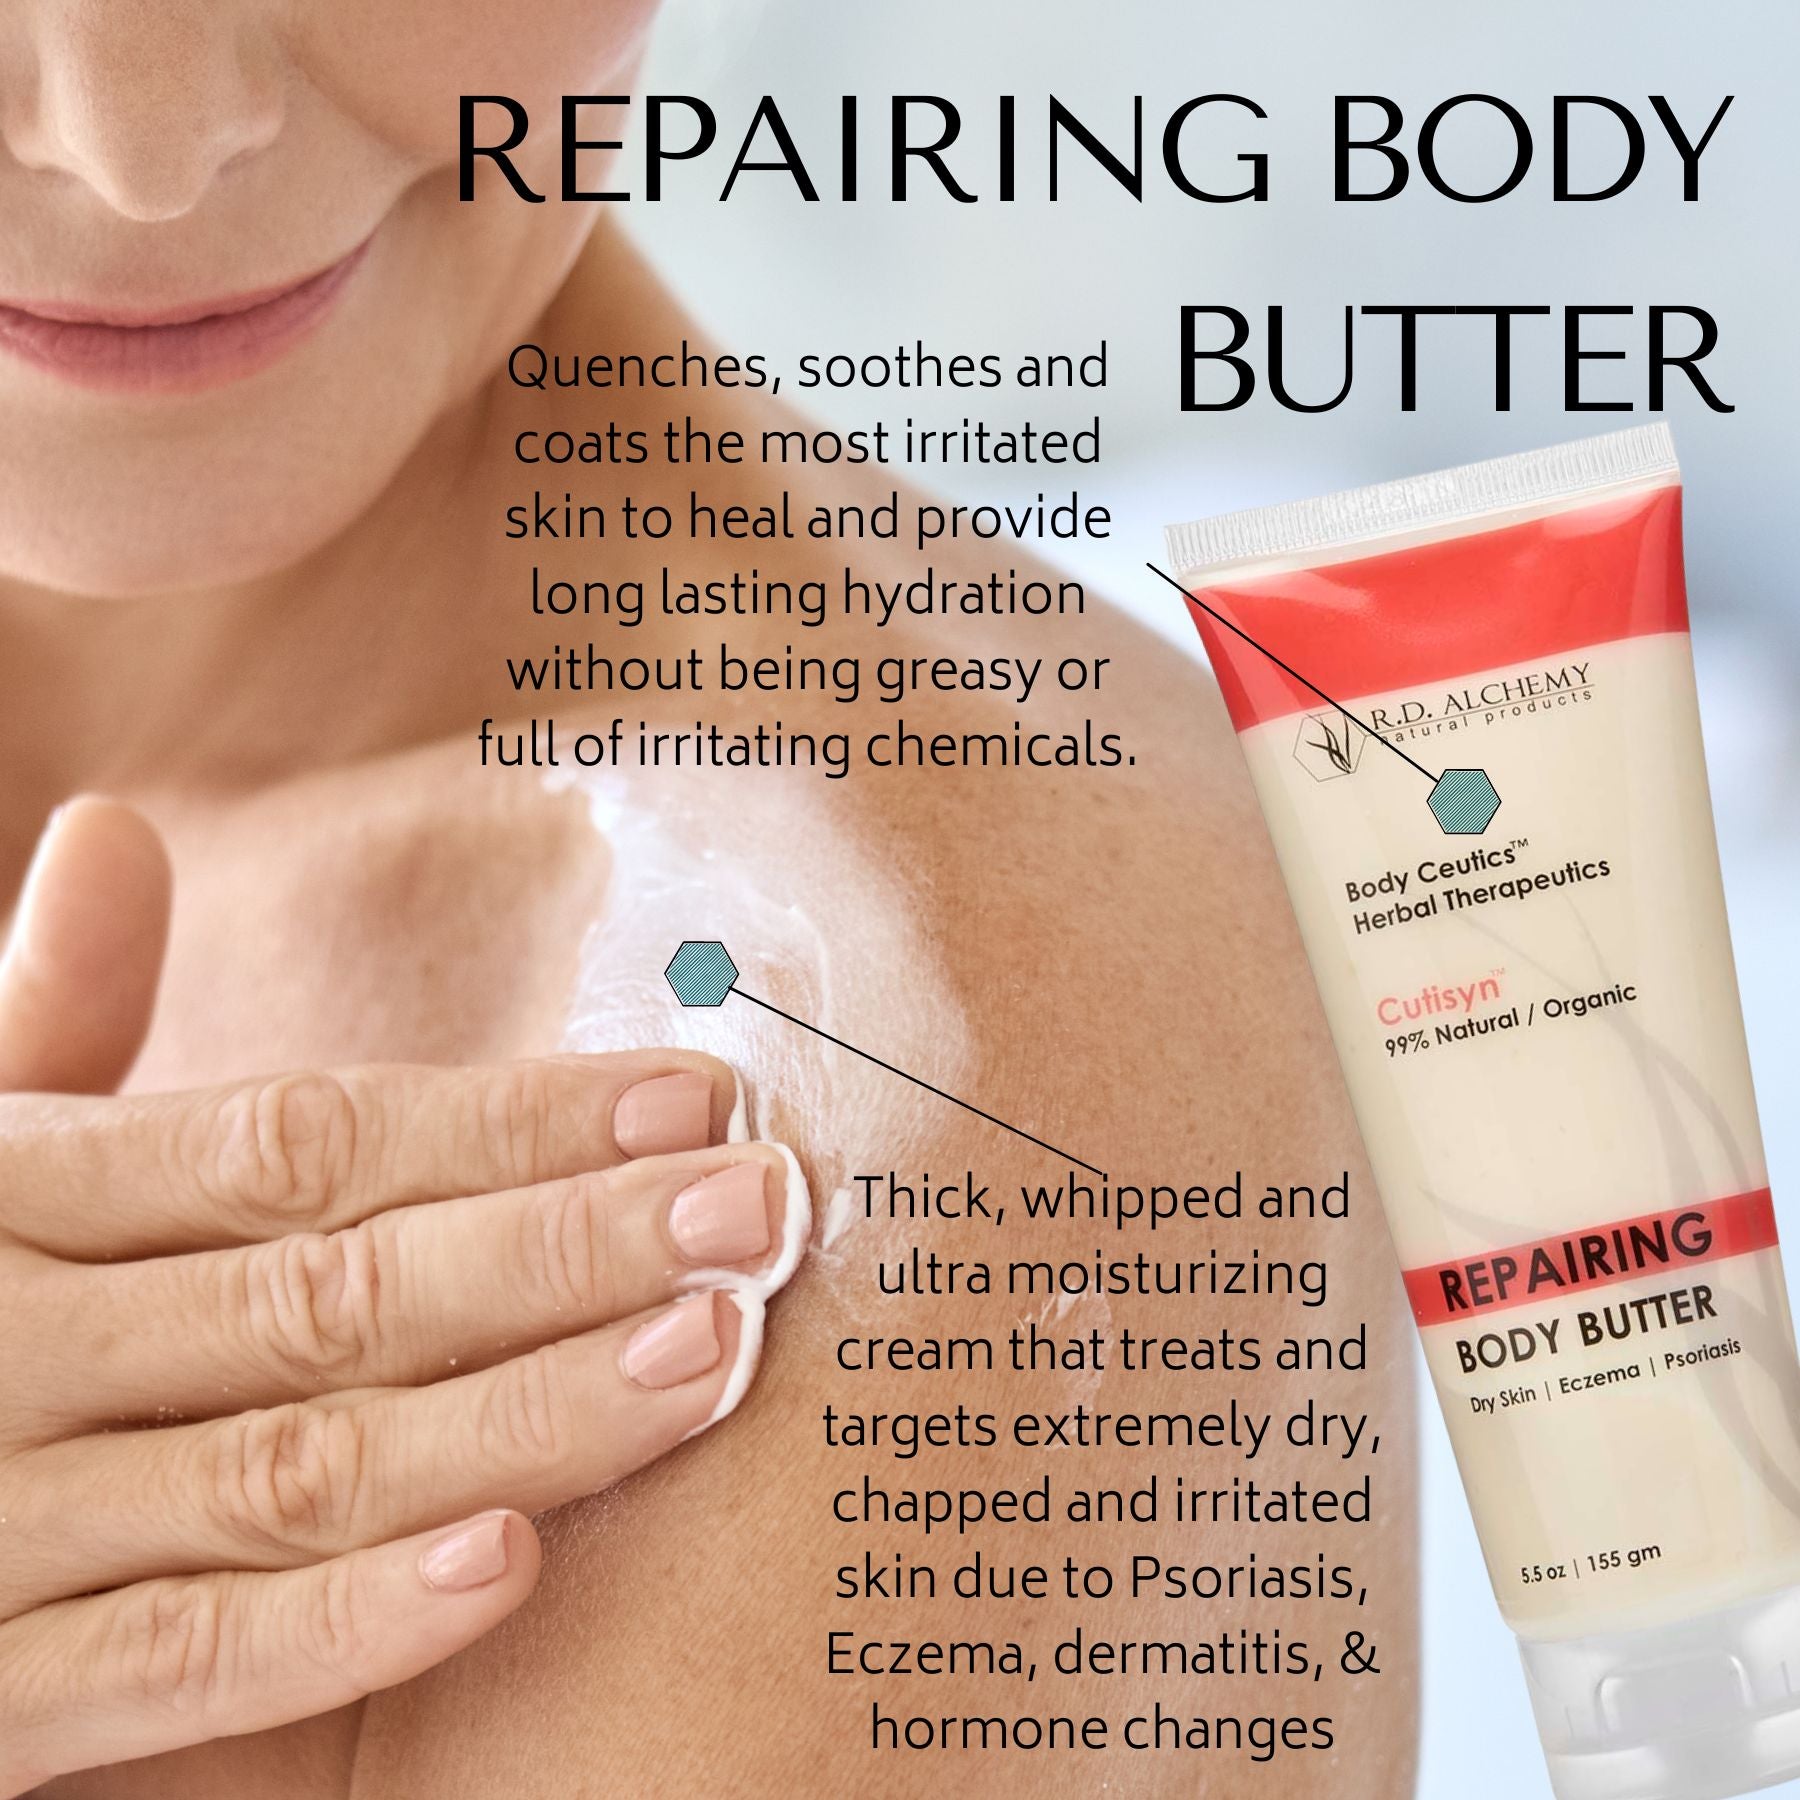 Repairing Body Butter